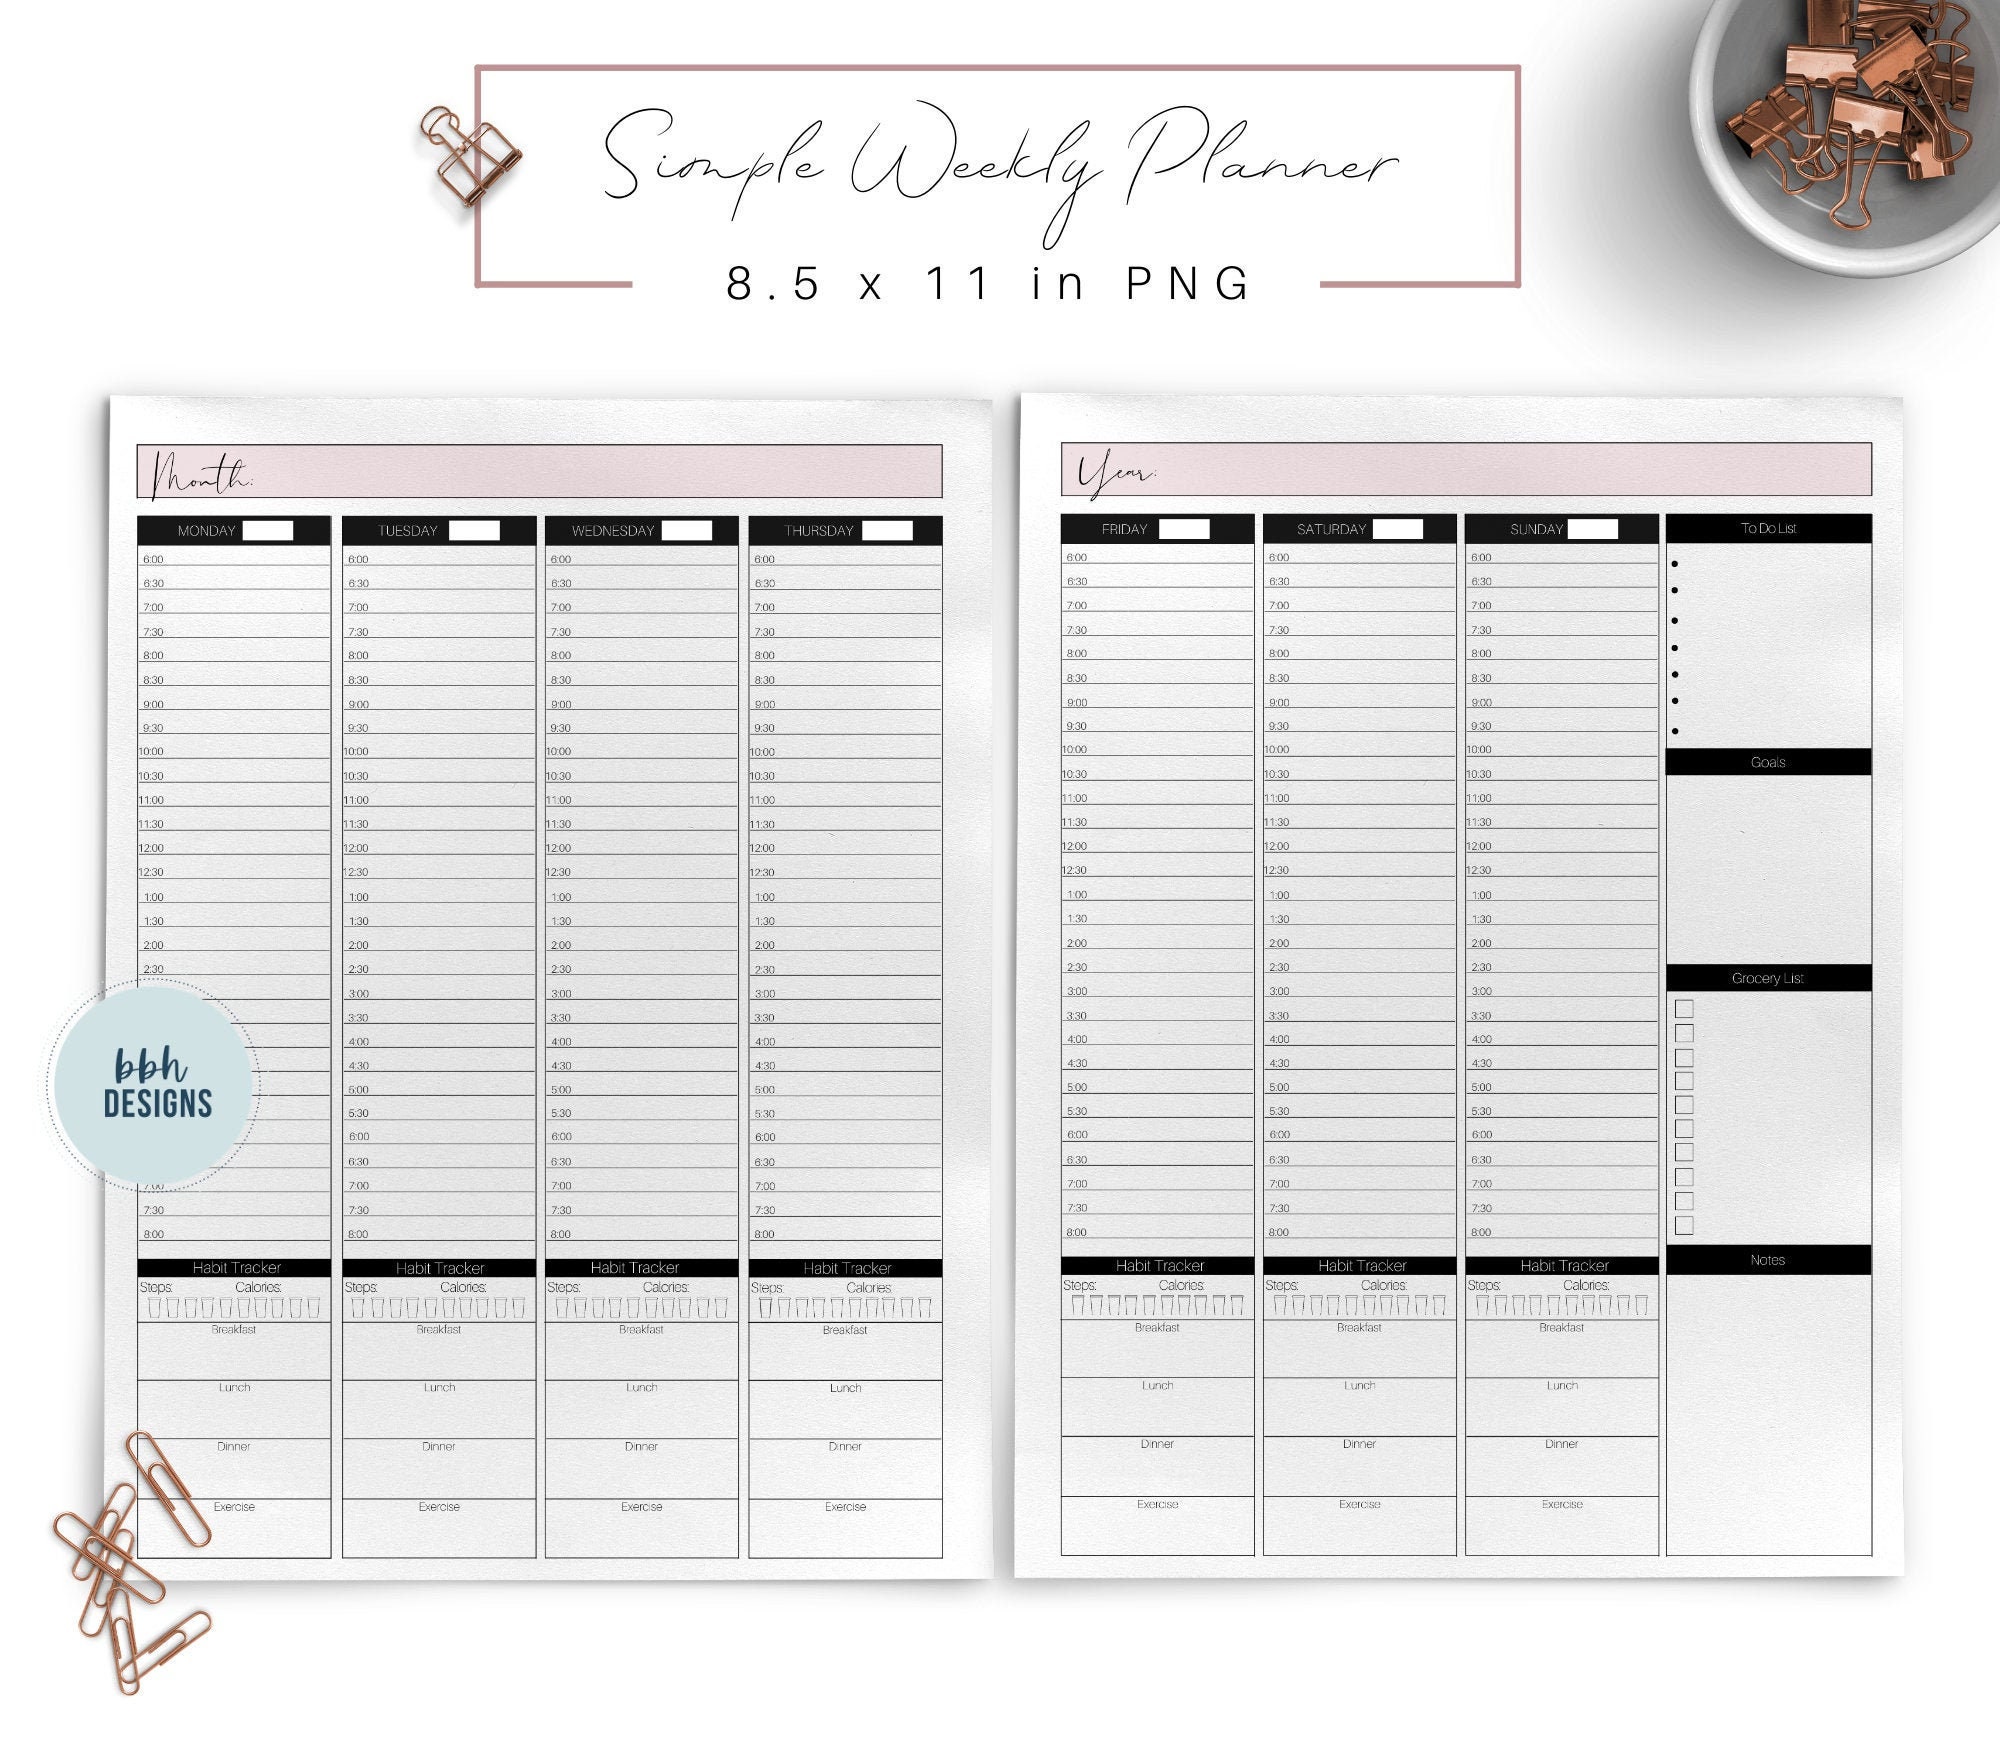 Simple Habit Daily Planner